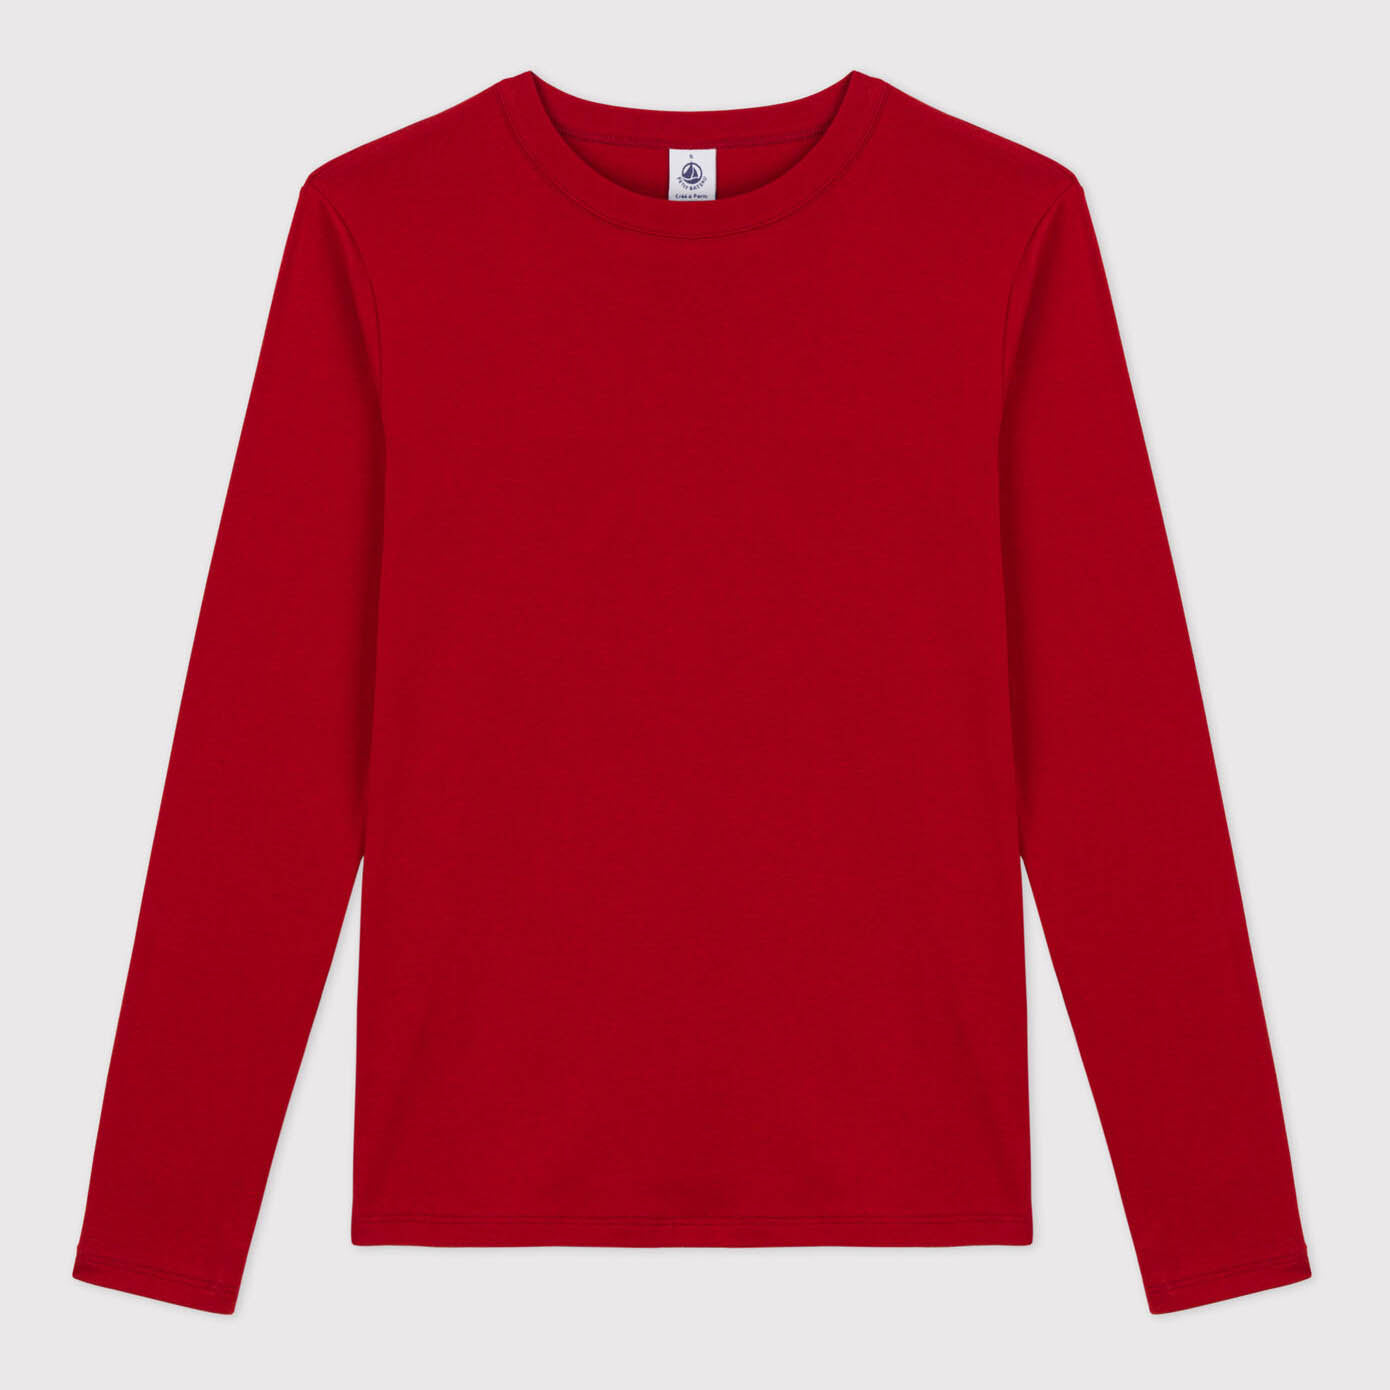 Girls Red Cotton T-Shirt